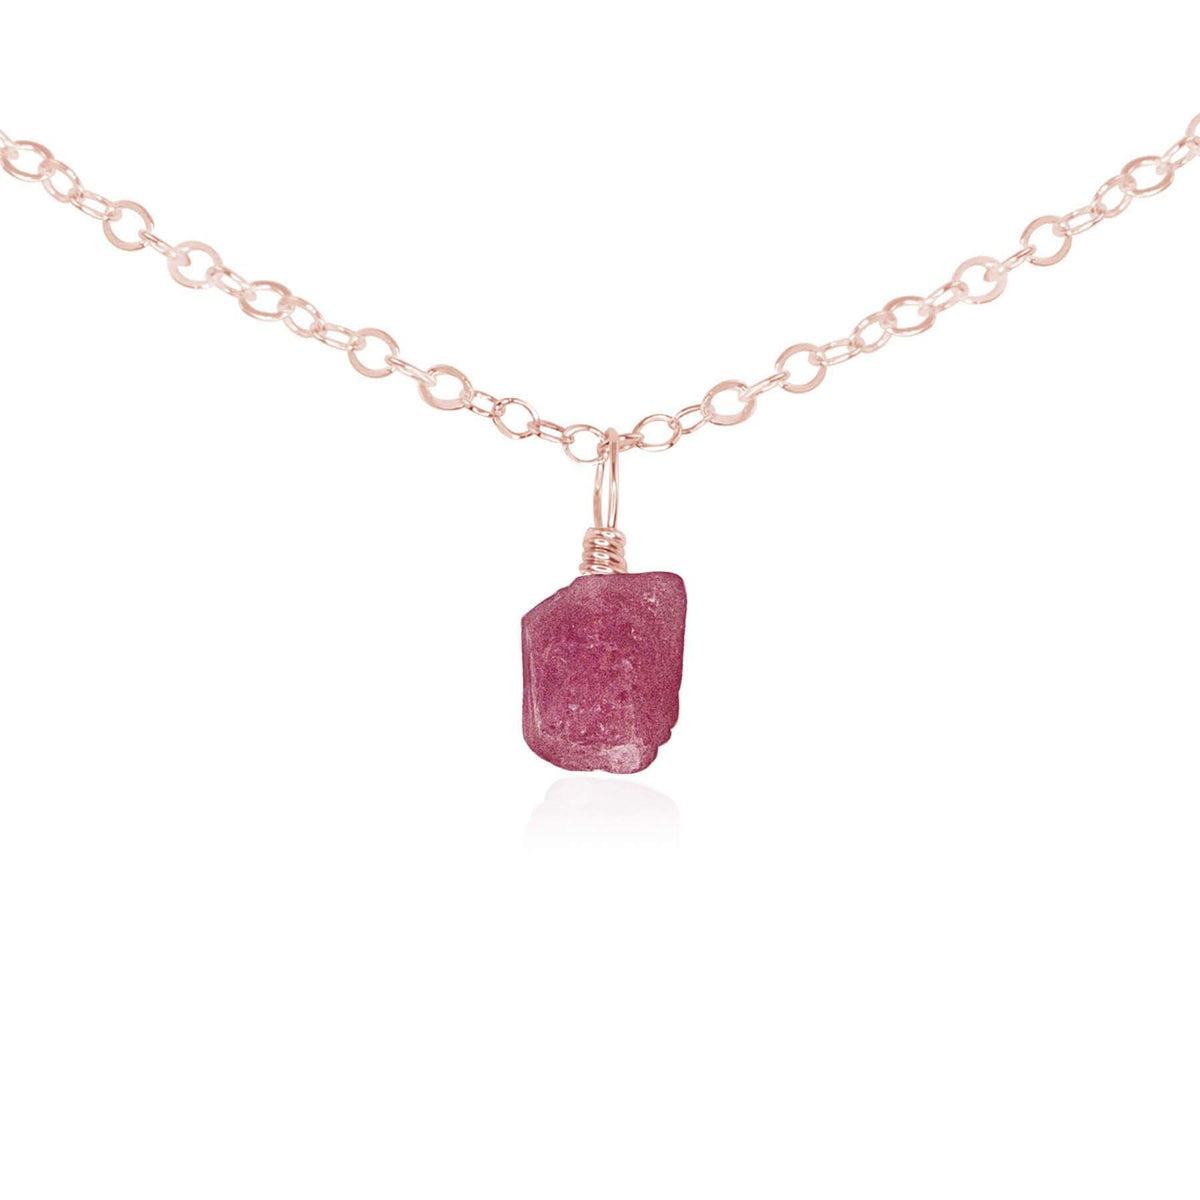 Tiny Rough Pink Tourmaline Gemstone Pendant Choker - Tiny Rough Pink Tourmaline Gemstone Pendant Choker - 14k Rose Gold Fill / Cable - Luna Tide Handmade Crystal Jewellery